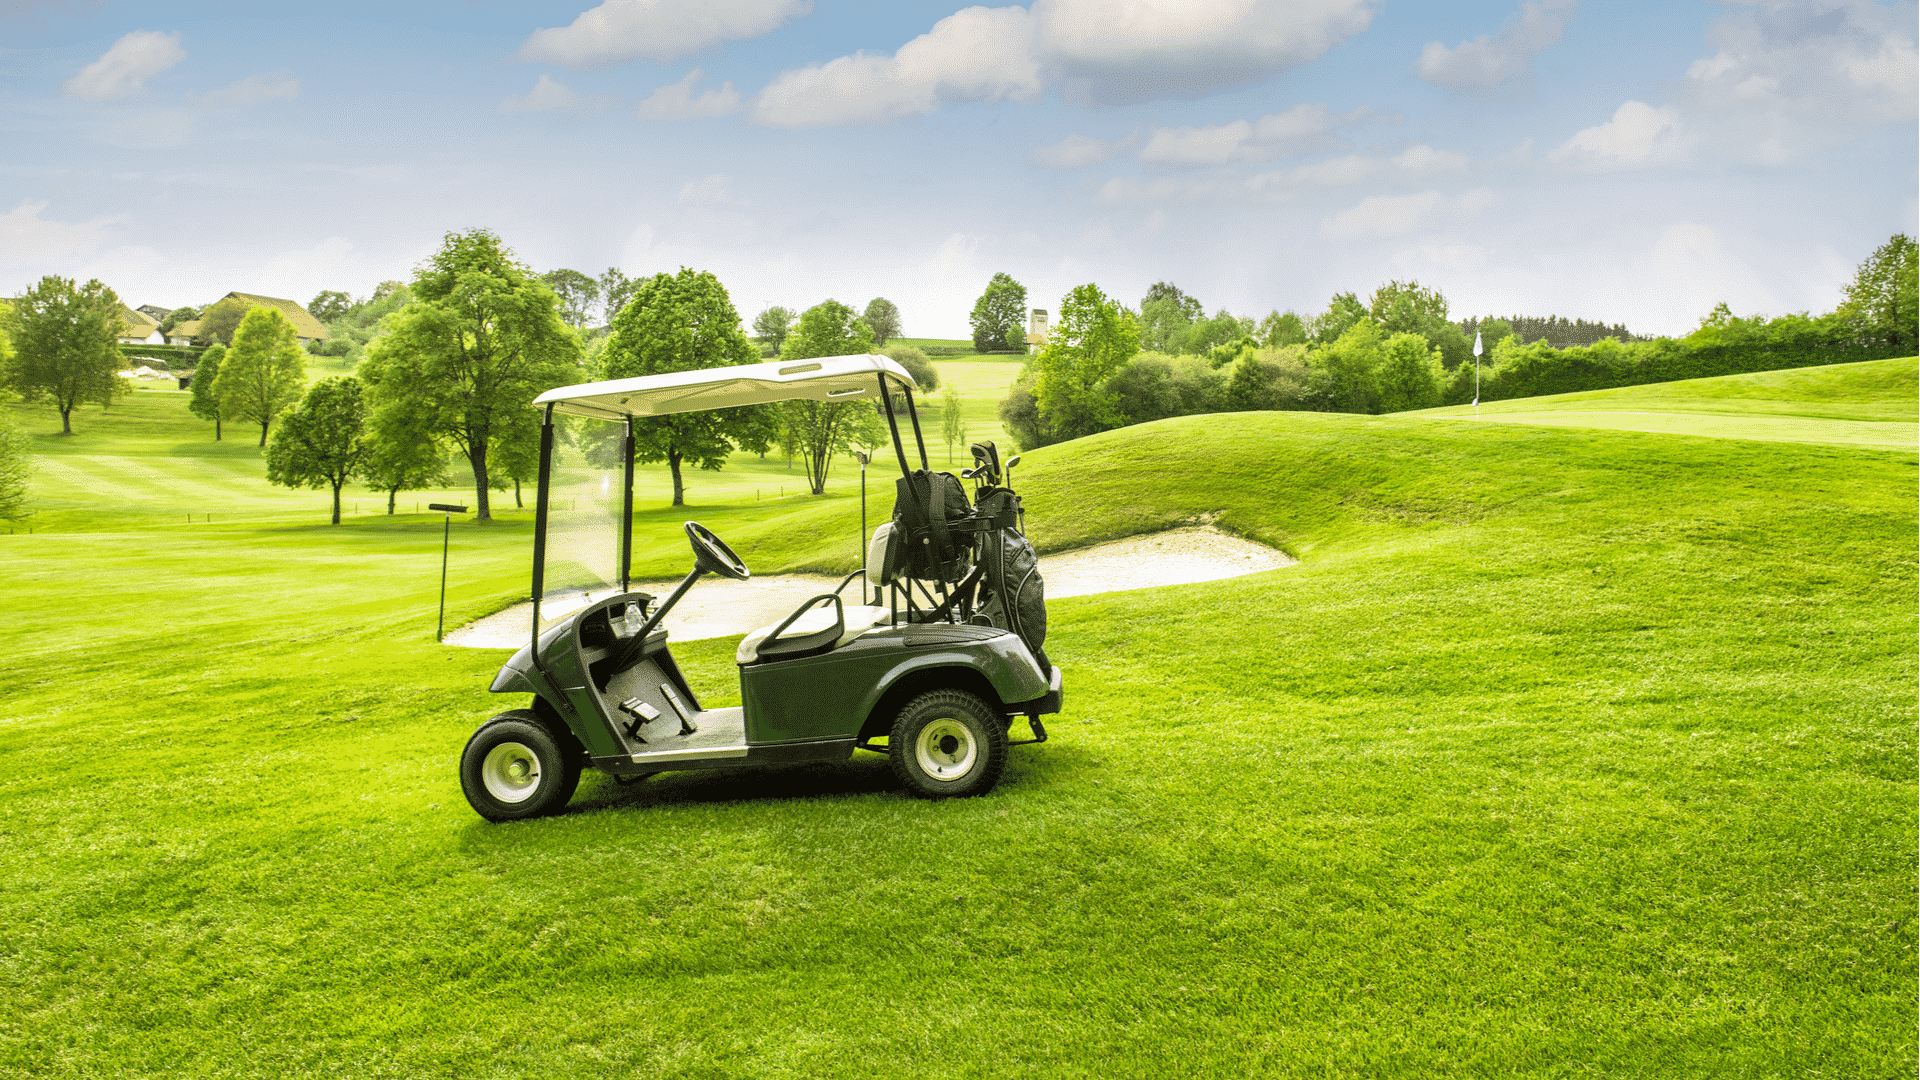 Edison Interactive teams up with Vistar Media to bring programmatic DOOH advertising to golf carts